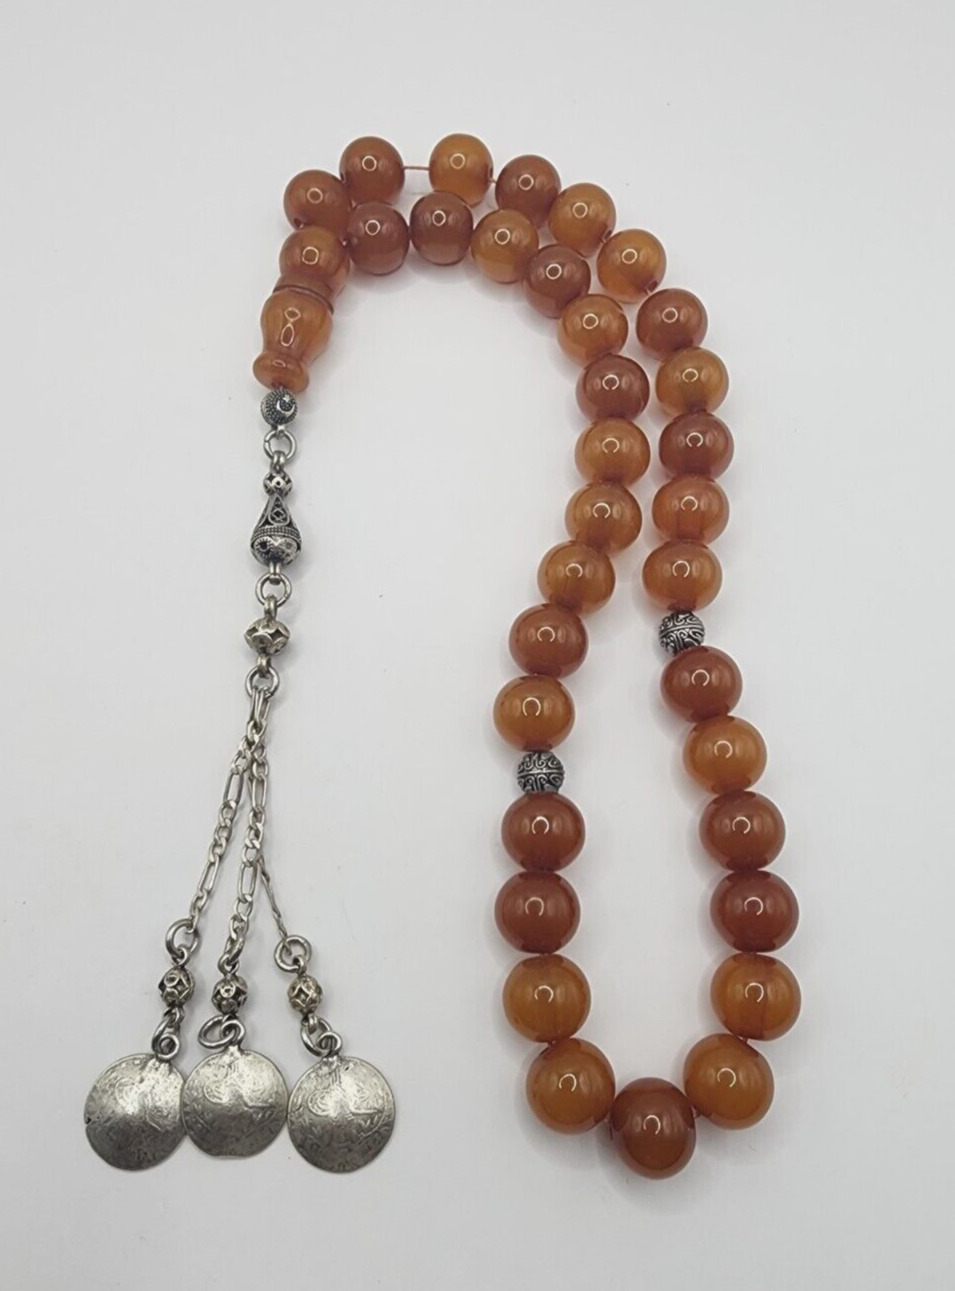 Antique Rosary German Fatoran Miscky Baltic Islamic 33 Prayer Beads Original